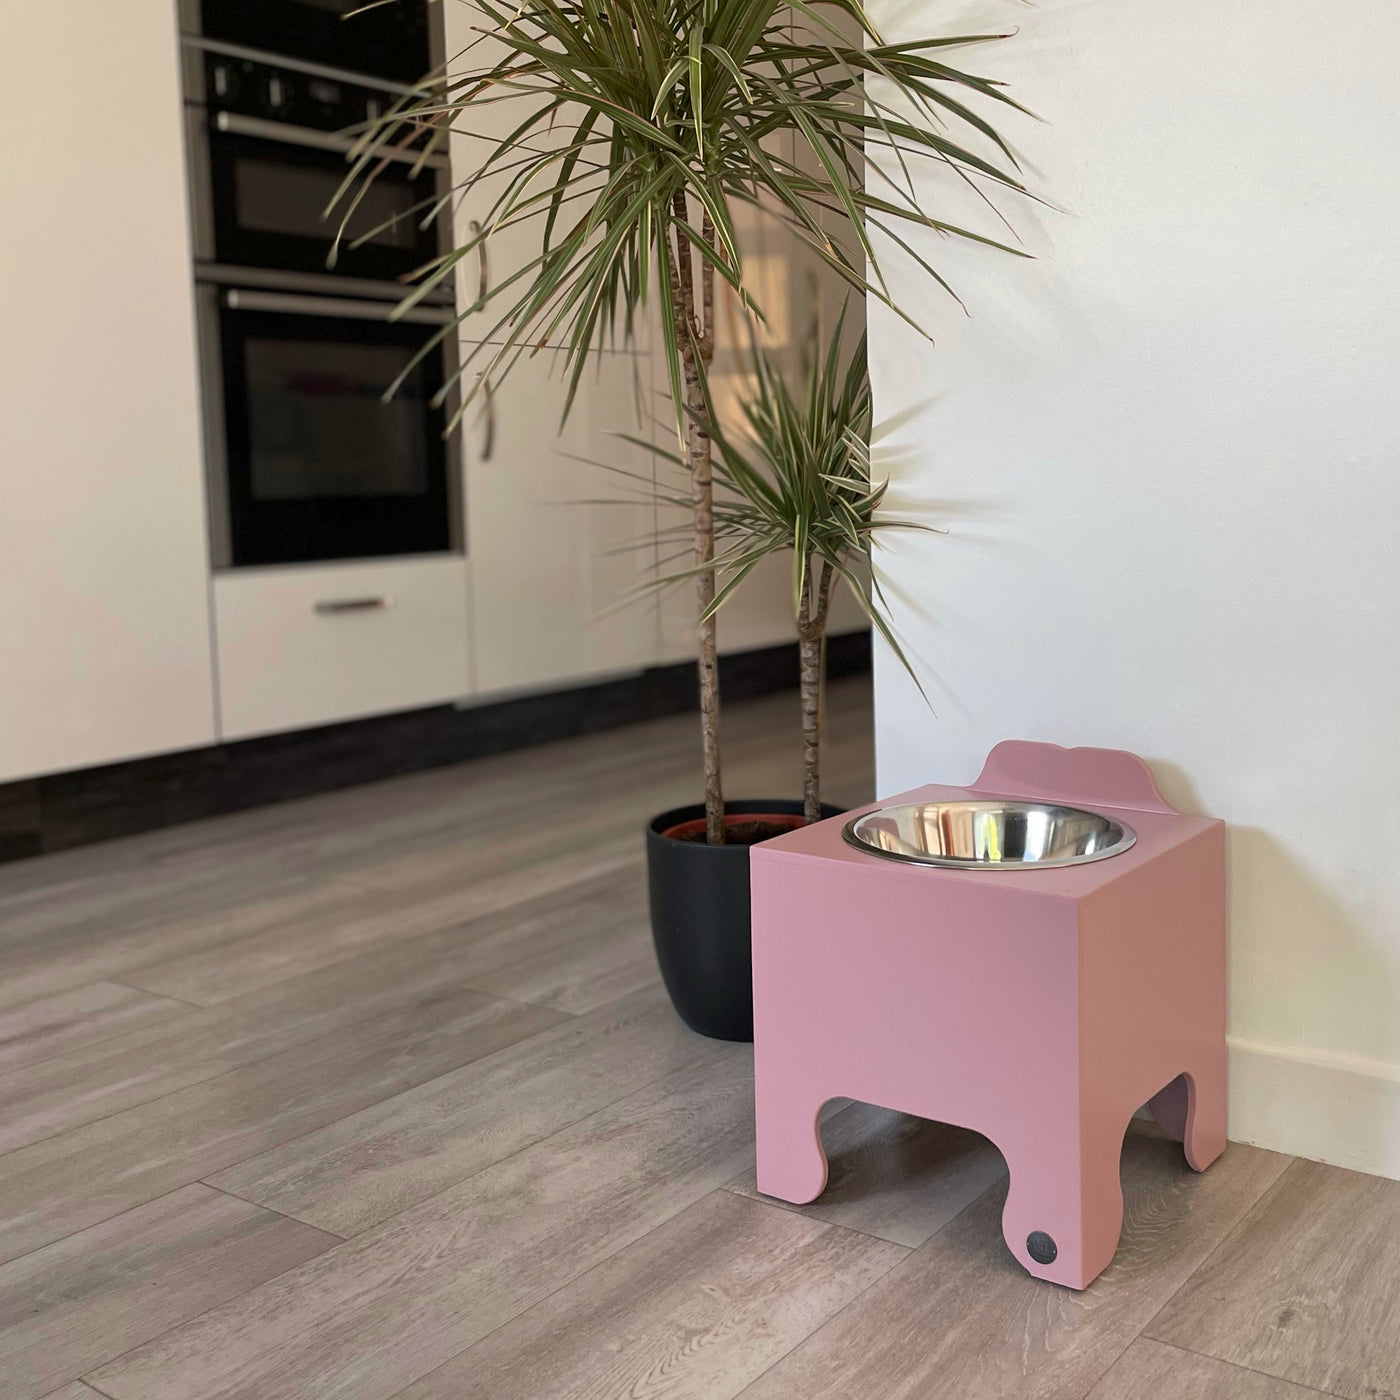 Single-dish design raised dog feeding stand in blush pink.